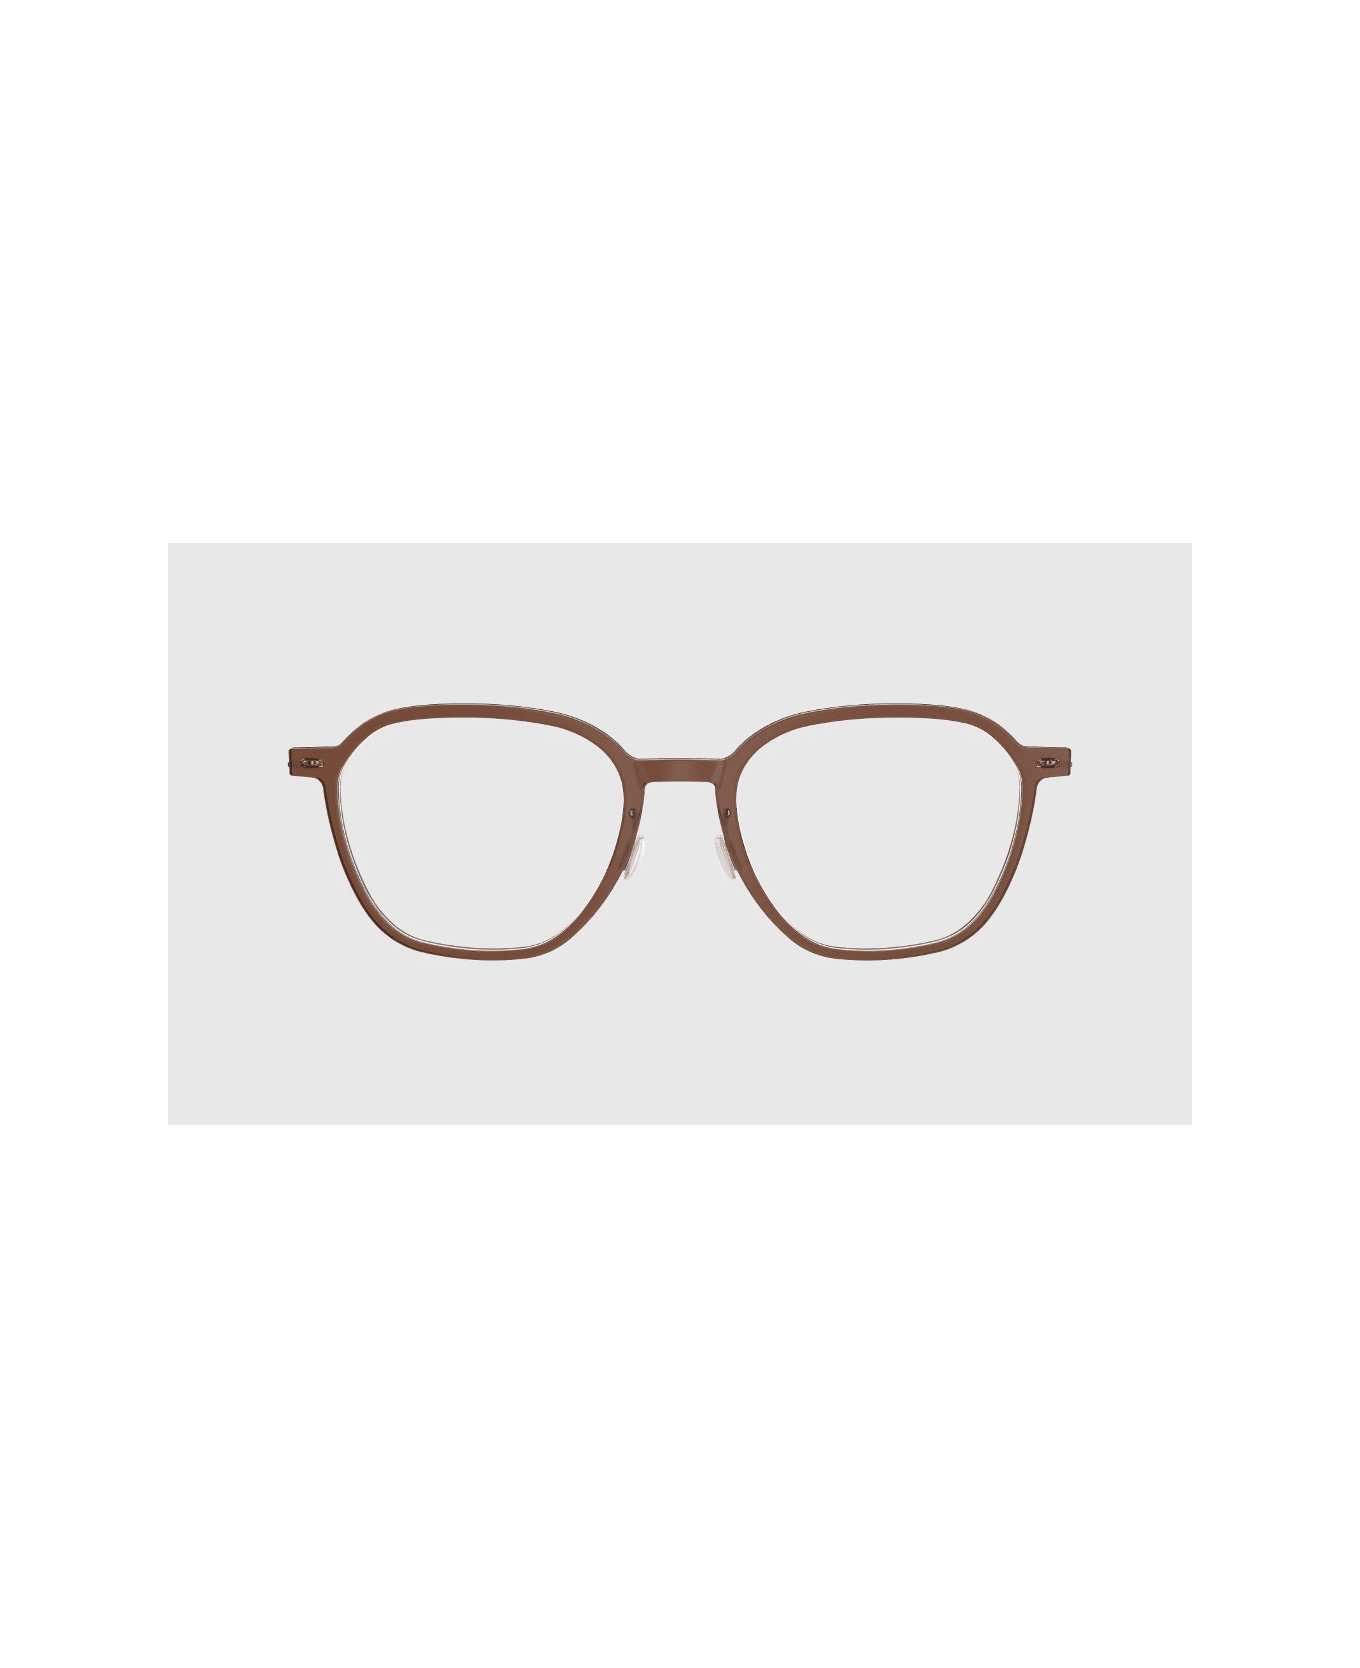 LINDBERG Now 6627 C02M Glasses